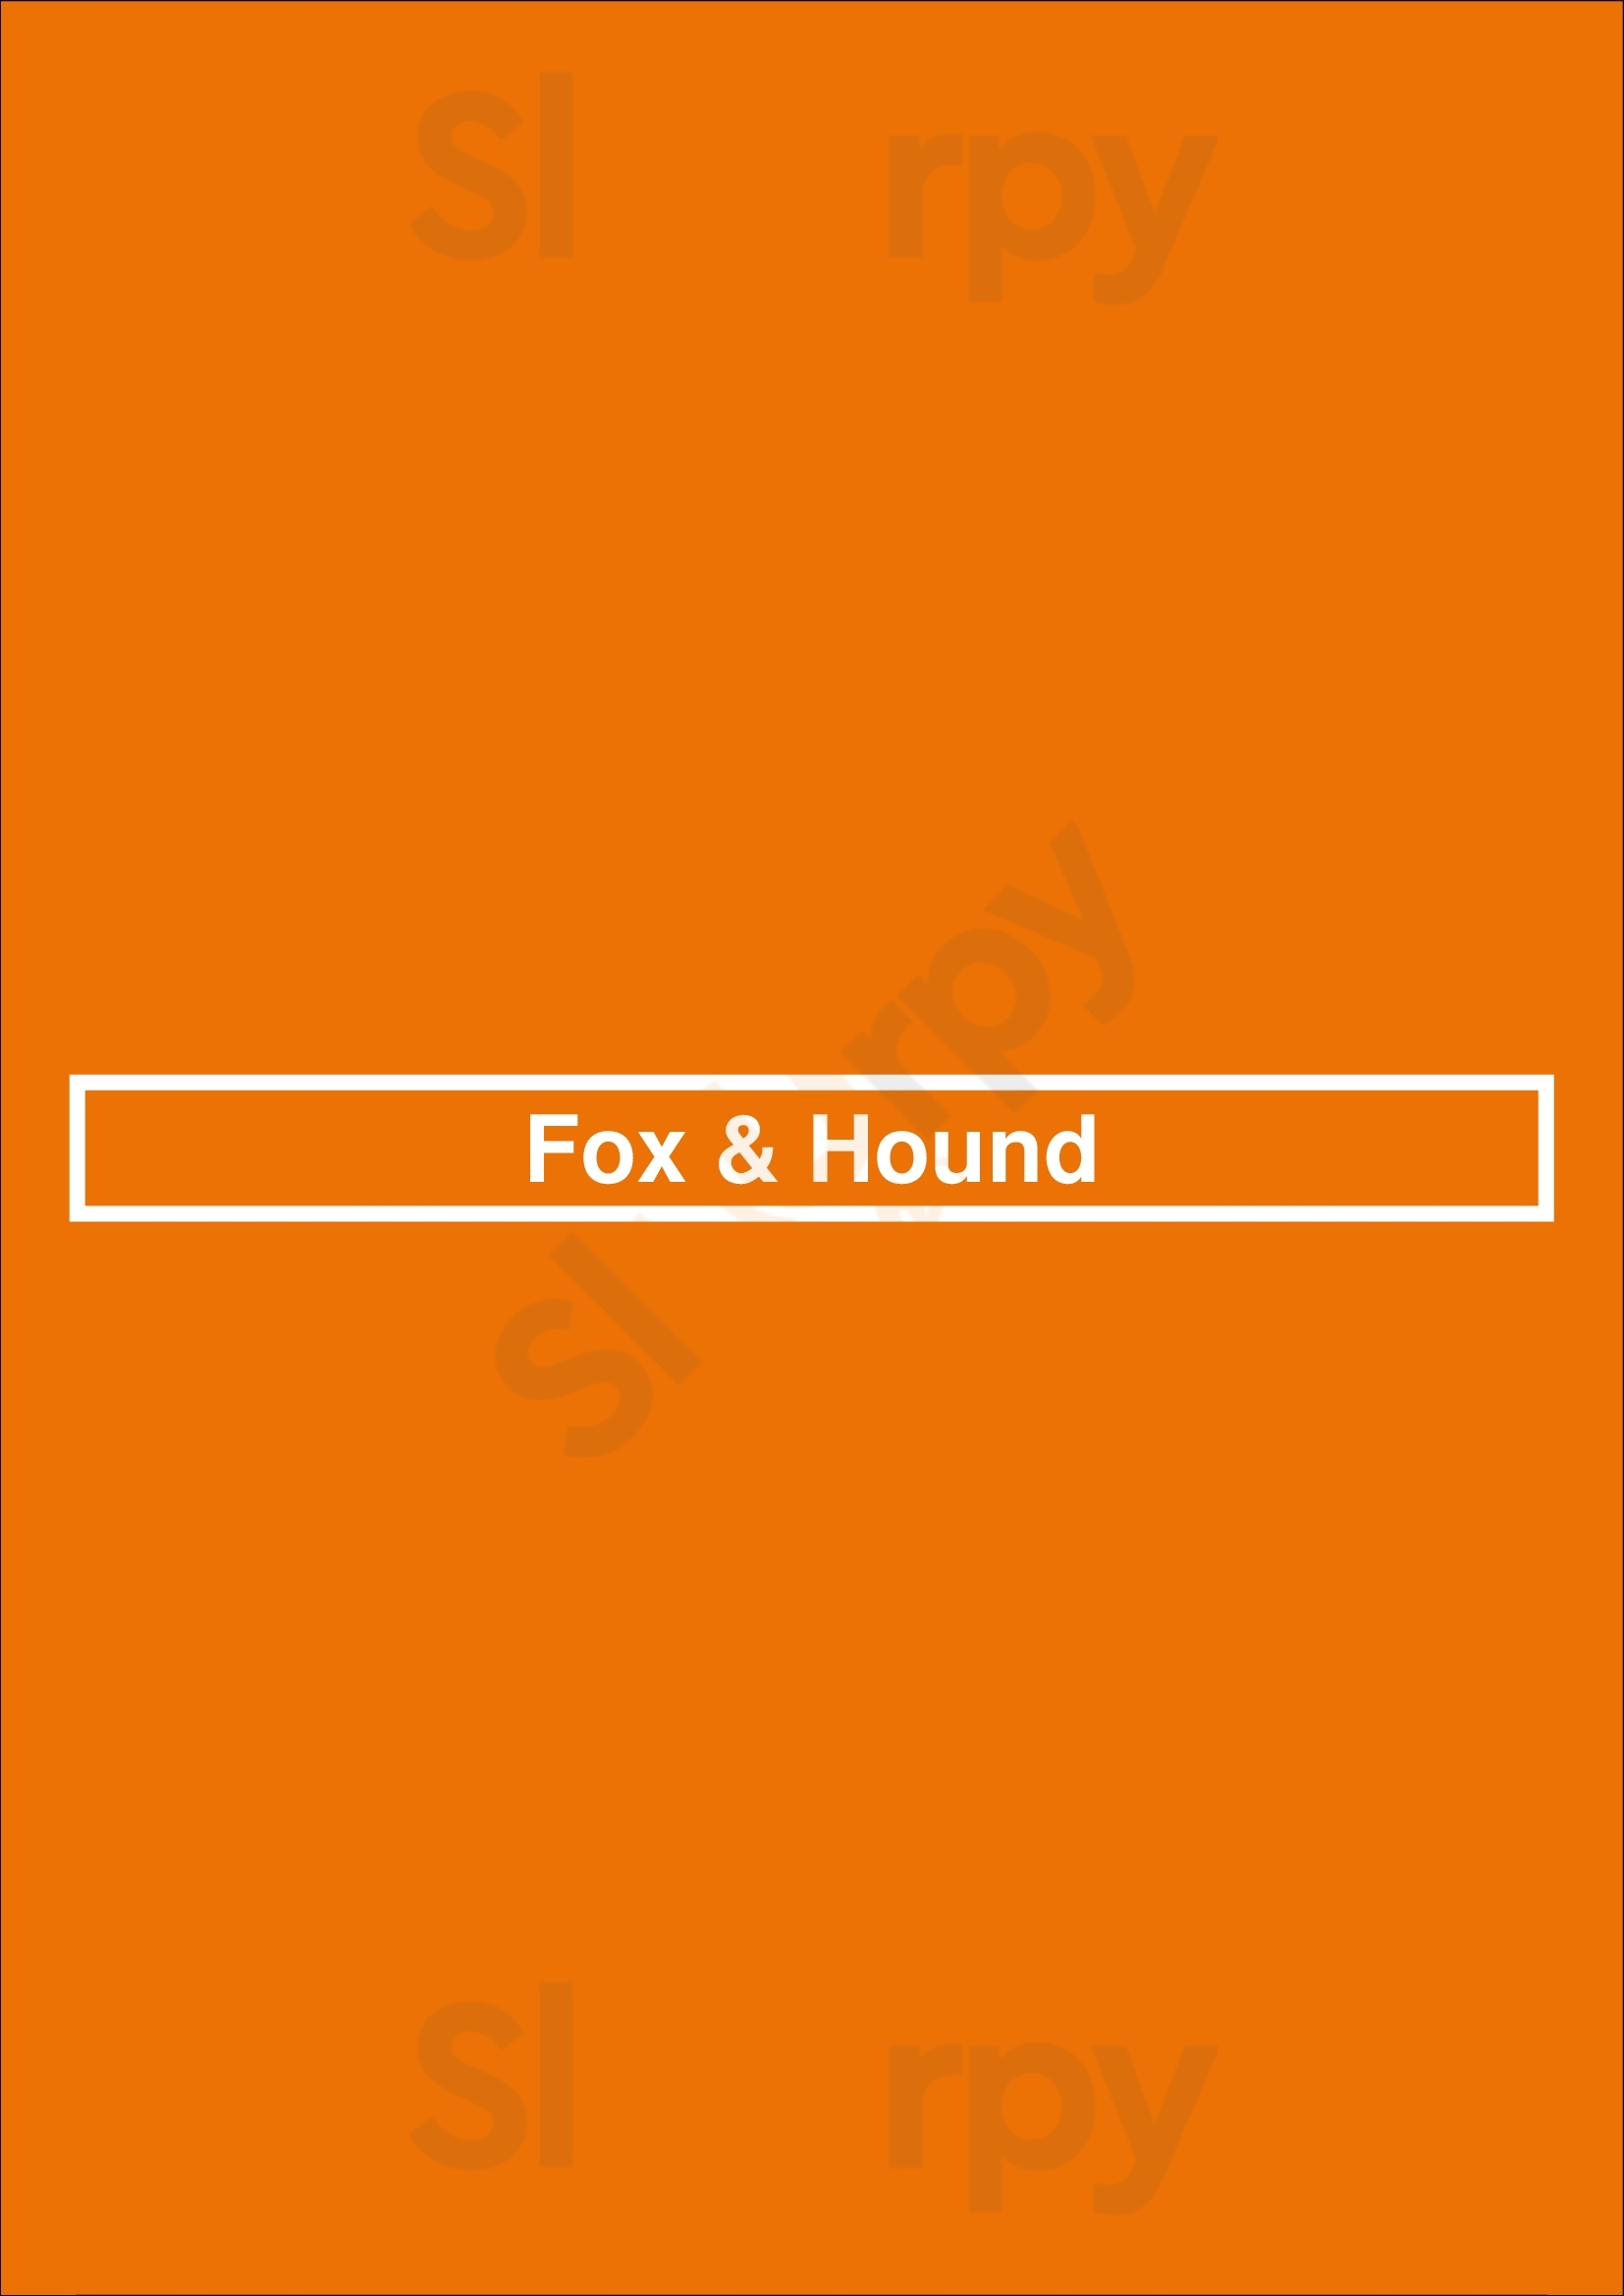 Fox & Hound Charlotte Menu - 1